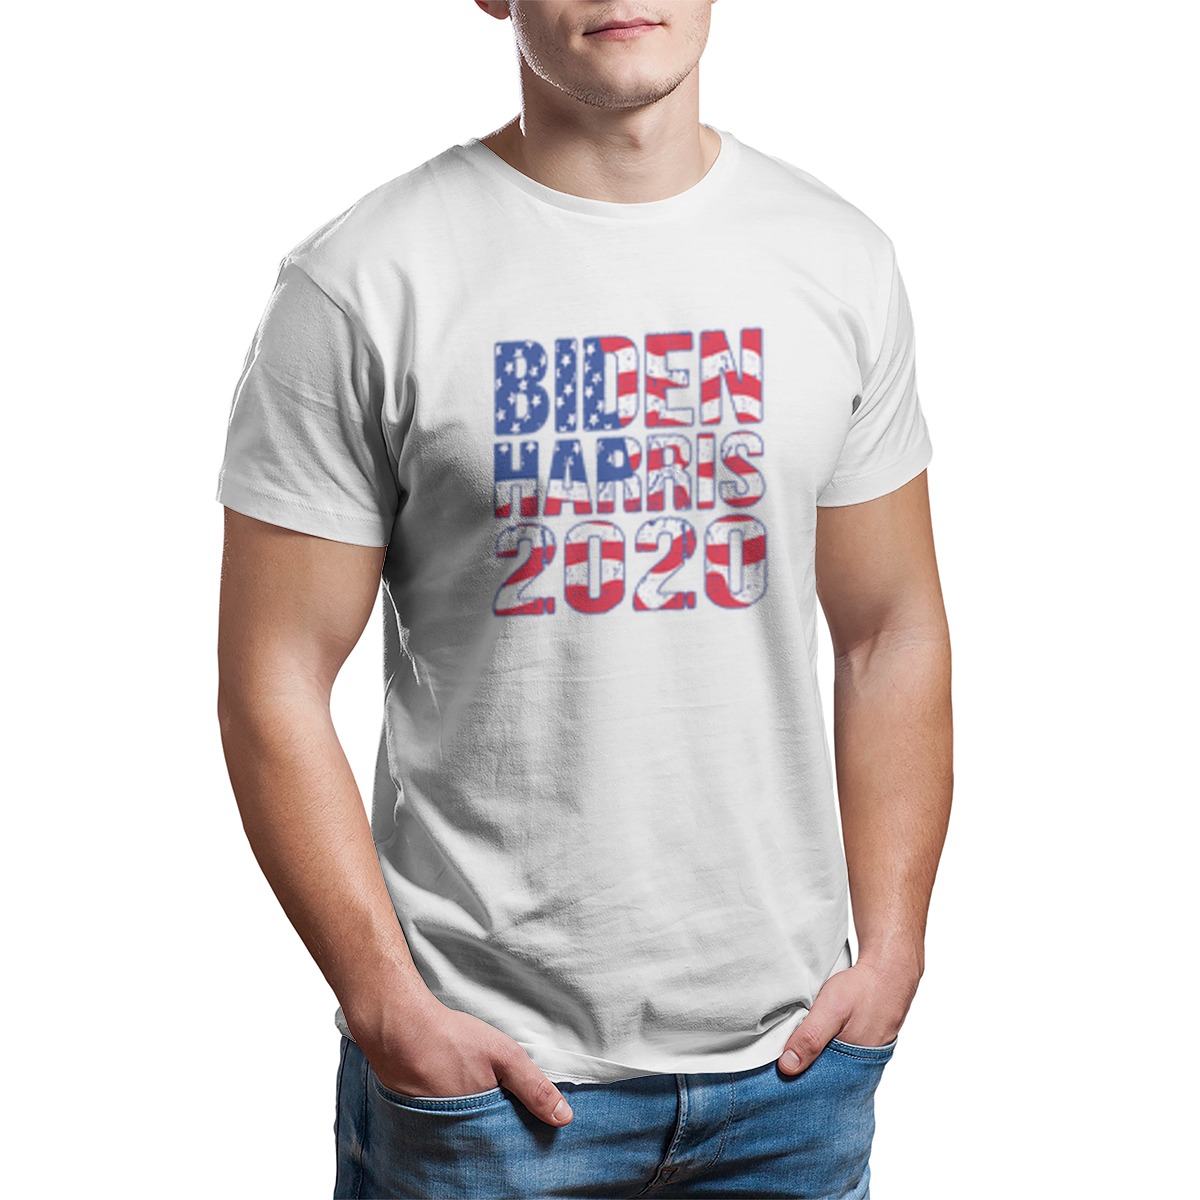 Biden Harris 20 Win Men's T Shirt Novelty Tops Bitumen Bike Life Tees Clothes Cotton Printed T-Shirt Plus Size Tshirts 3301